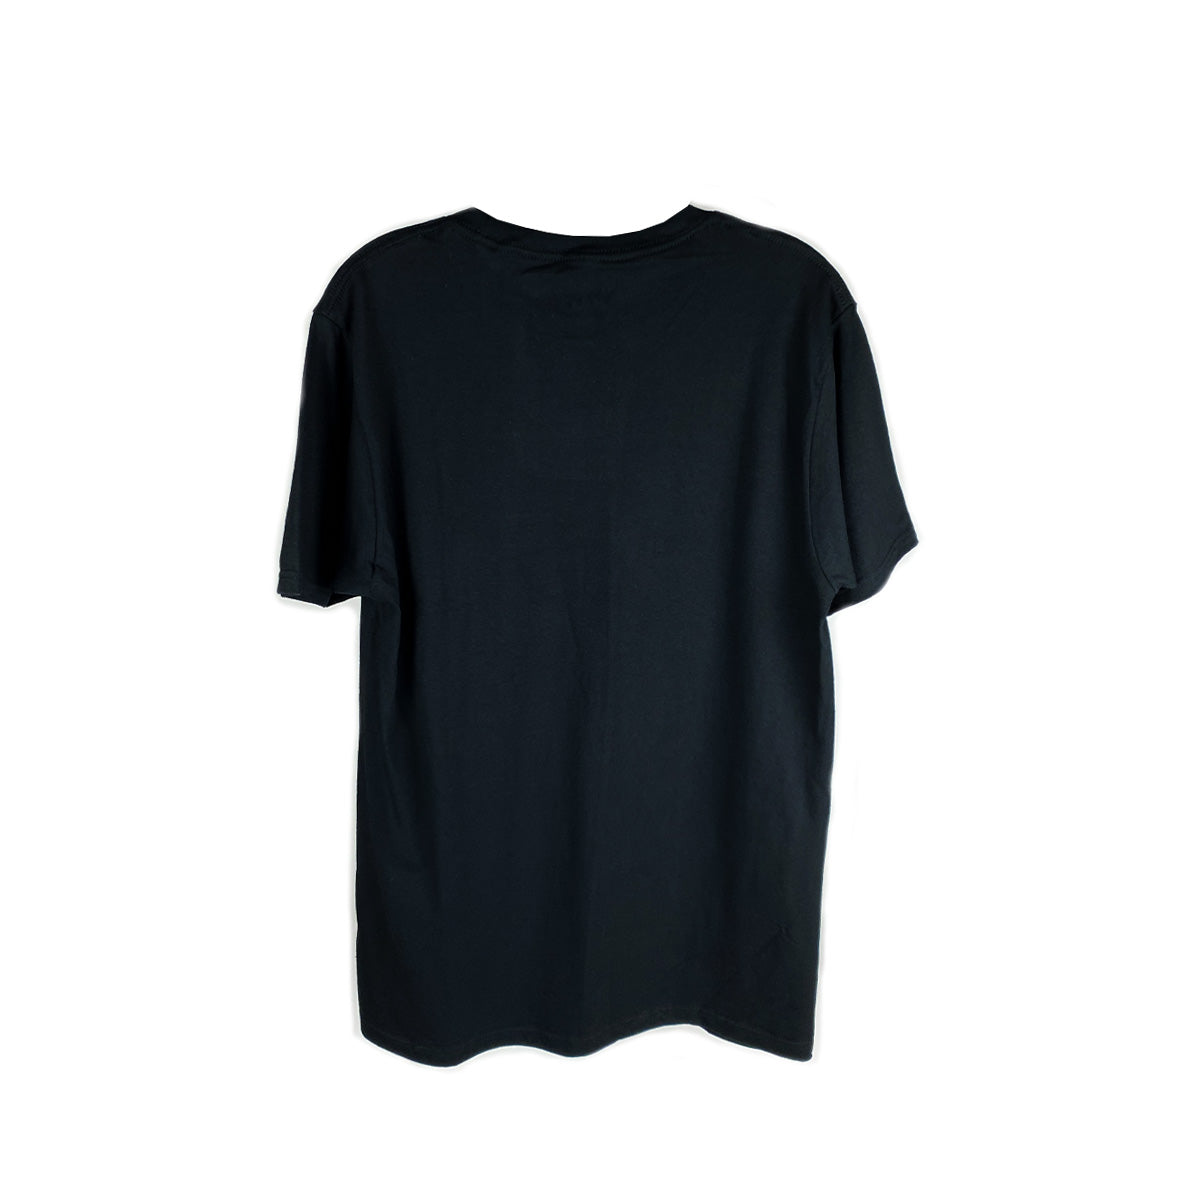 Stay Fresh 100% Cotton T-Shirt, Pack of 6 Units 1S, 2M, 2L, 1XL